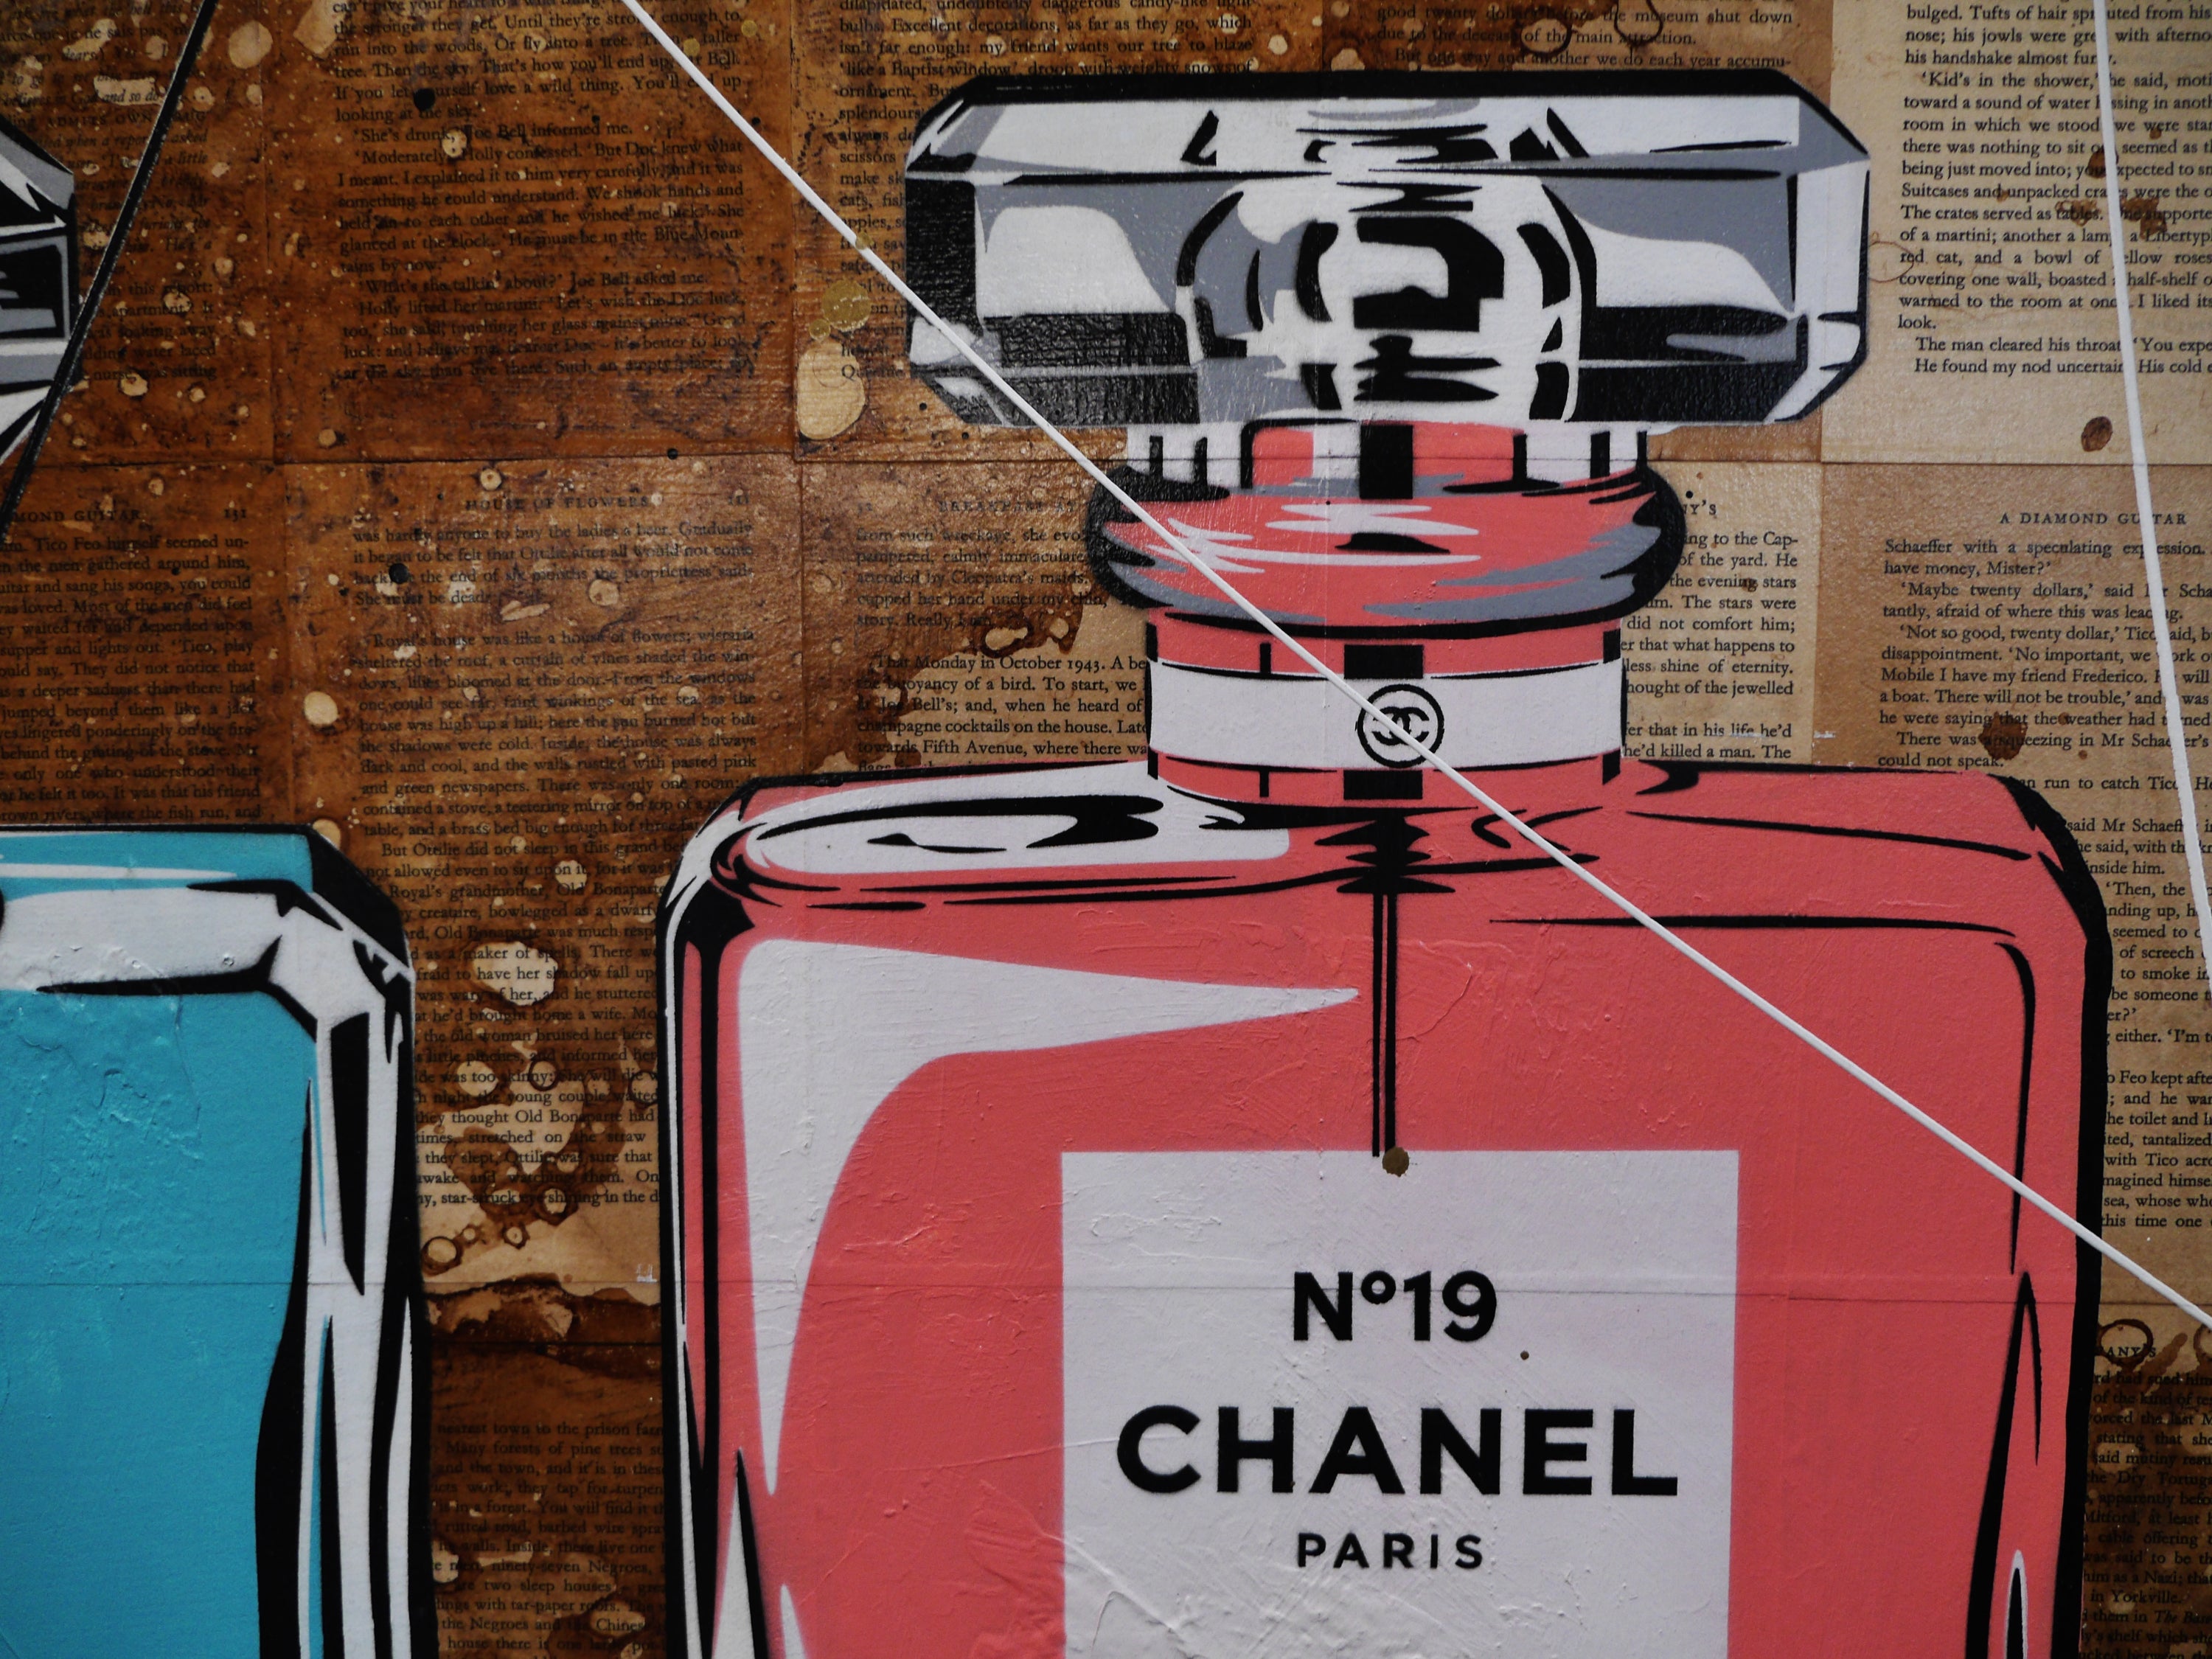 Fragrances 160cm x 60cm Chanel Perfume Bottles Urban Pop Book Club Painting (SOLD)